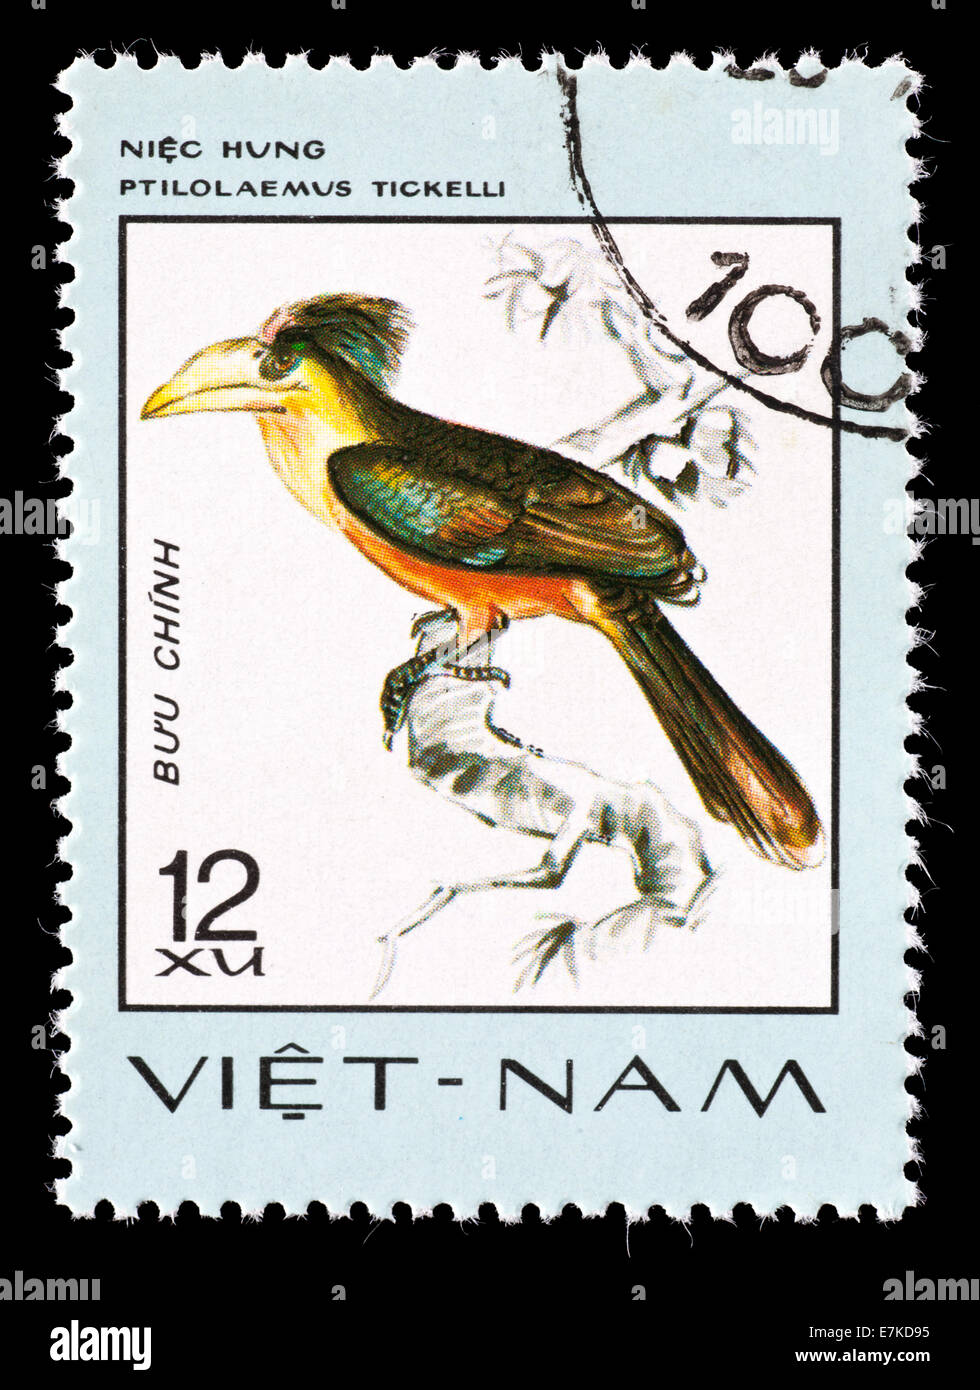 Postage stamp from Vietnam depicting a Tickells Brown Hornbill (Ptilolaemus tickelli) Stock Photo